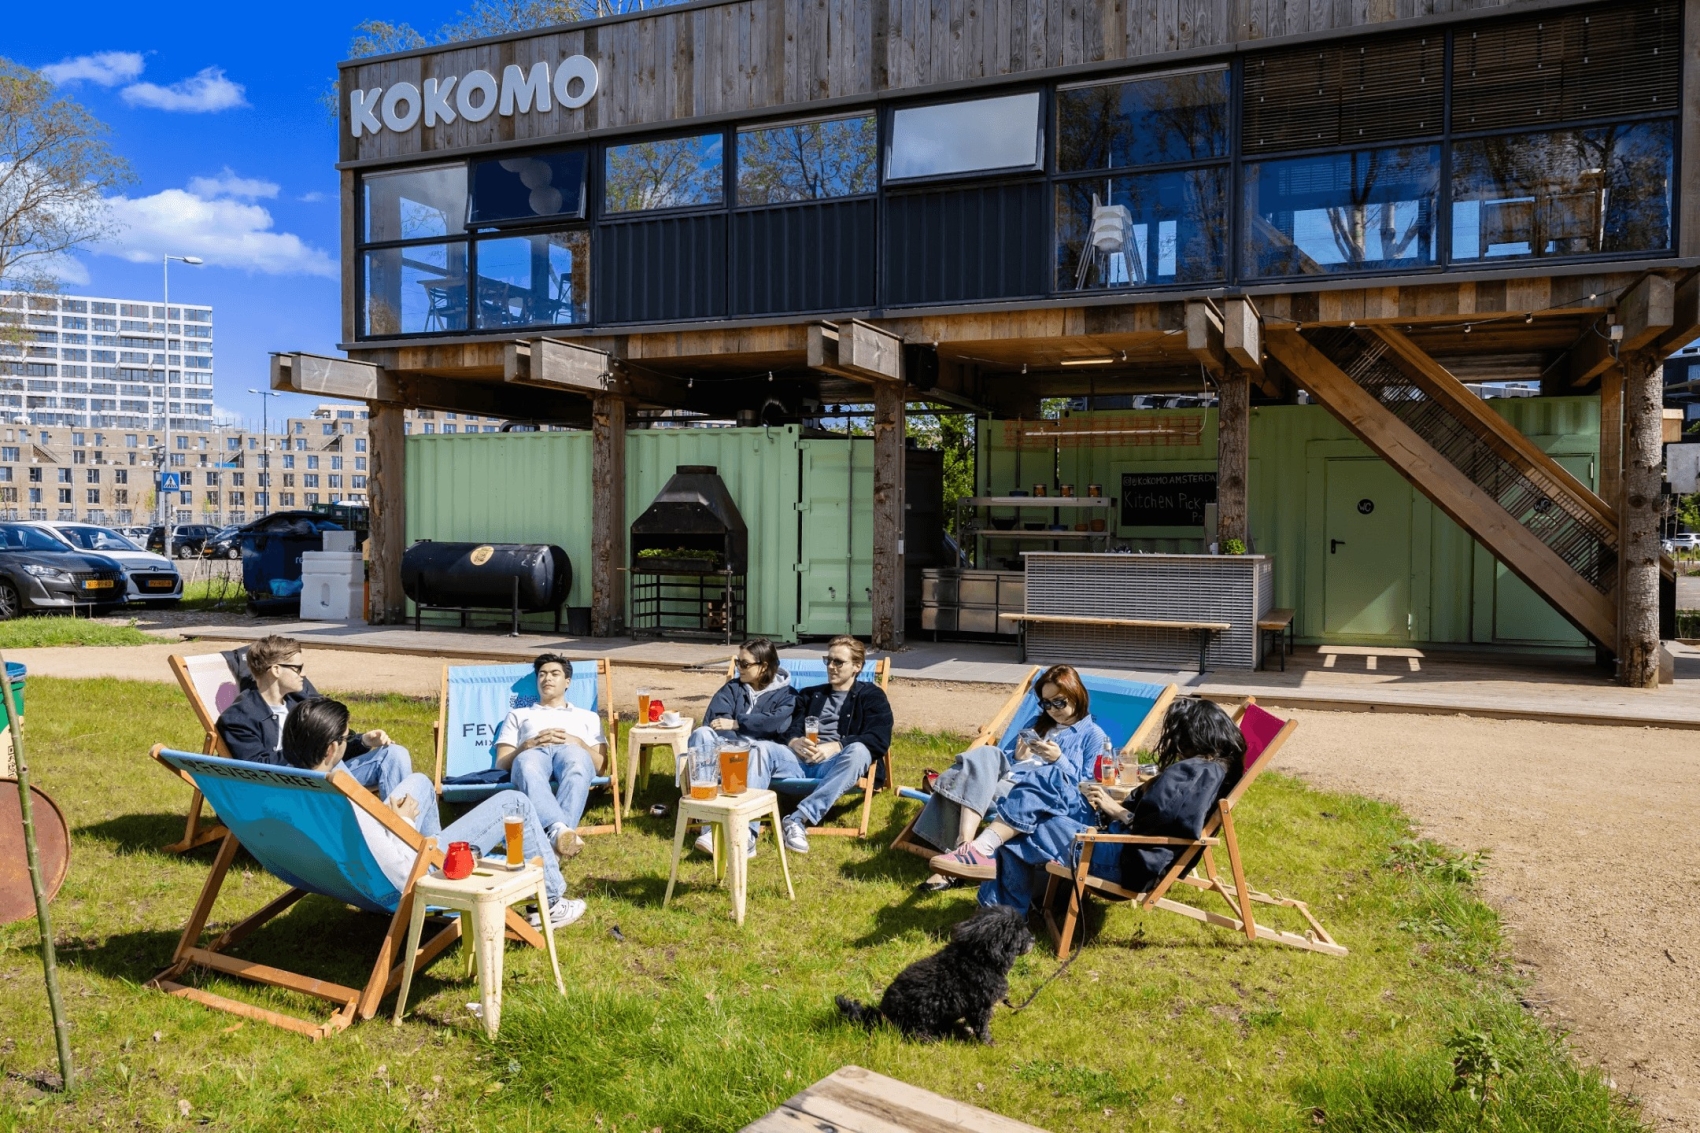 Stadsstrand Kokomo geopend op Zeeburgereiland